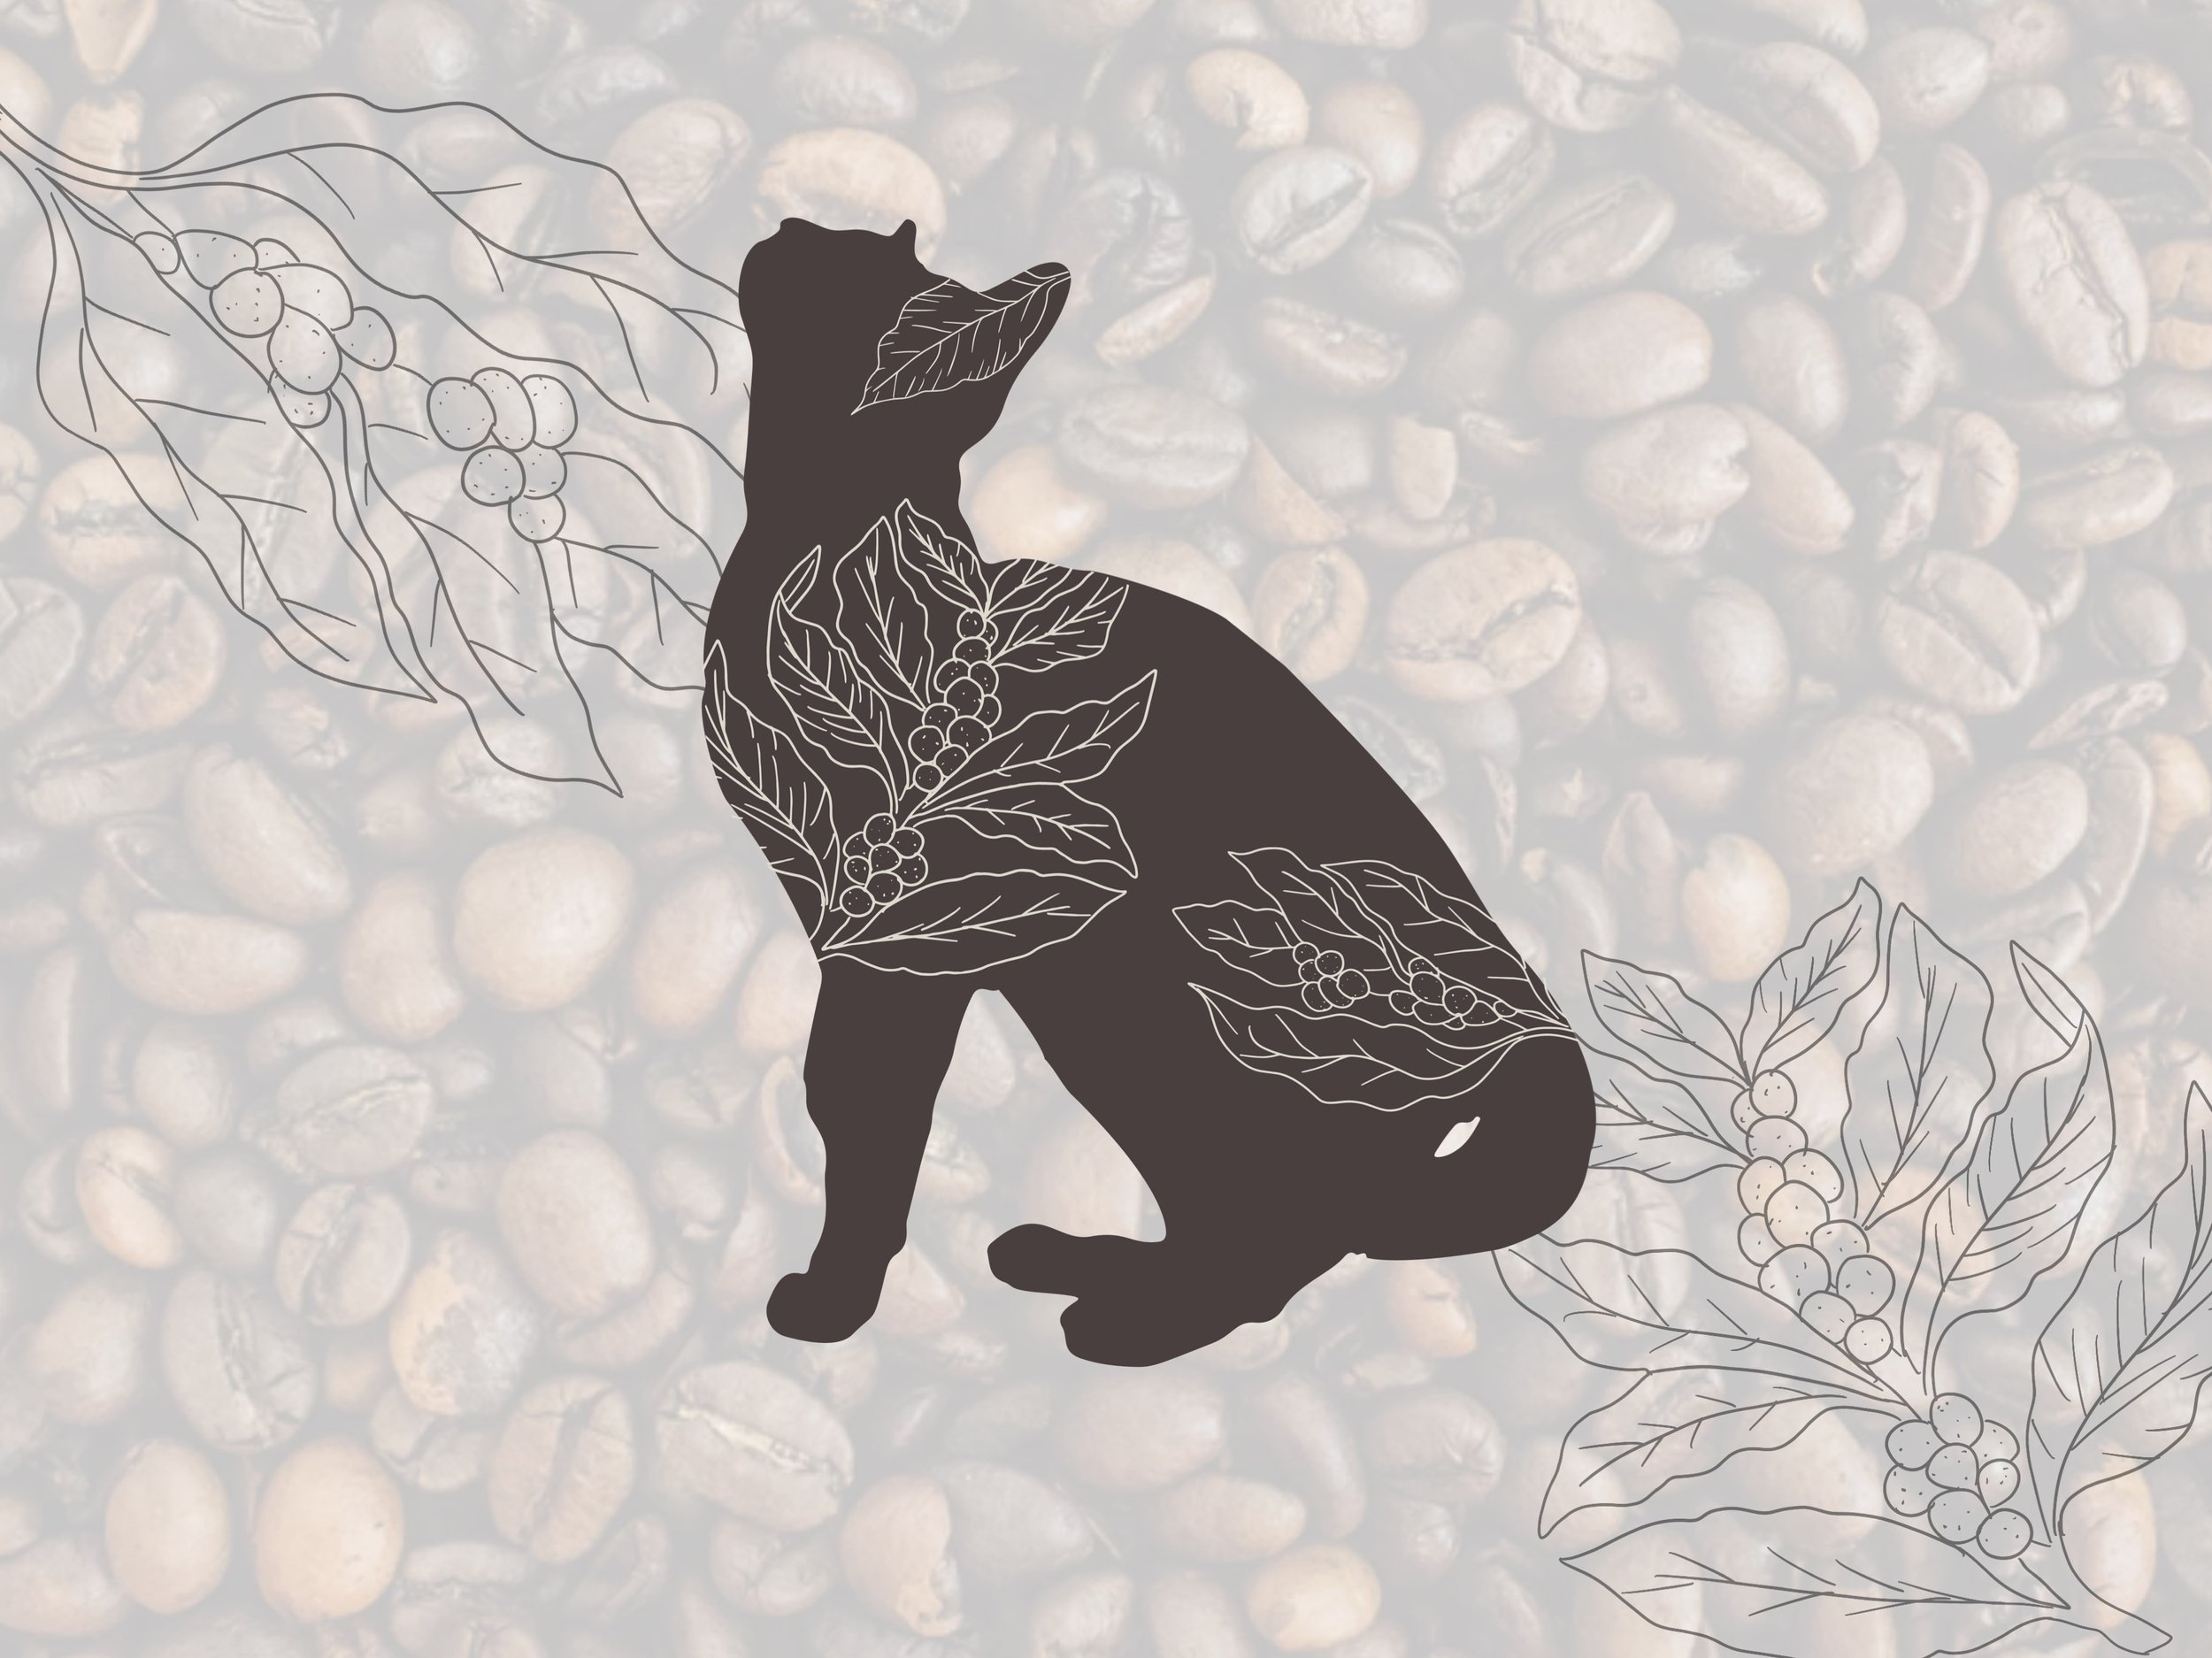 Coming Soon: Sioux City cat café makes progress